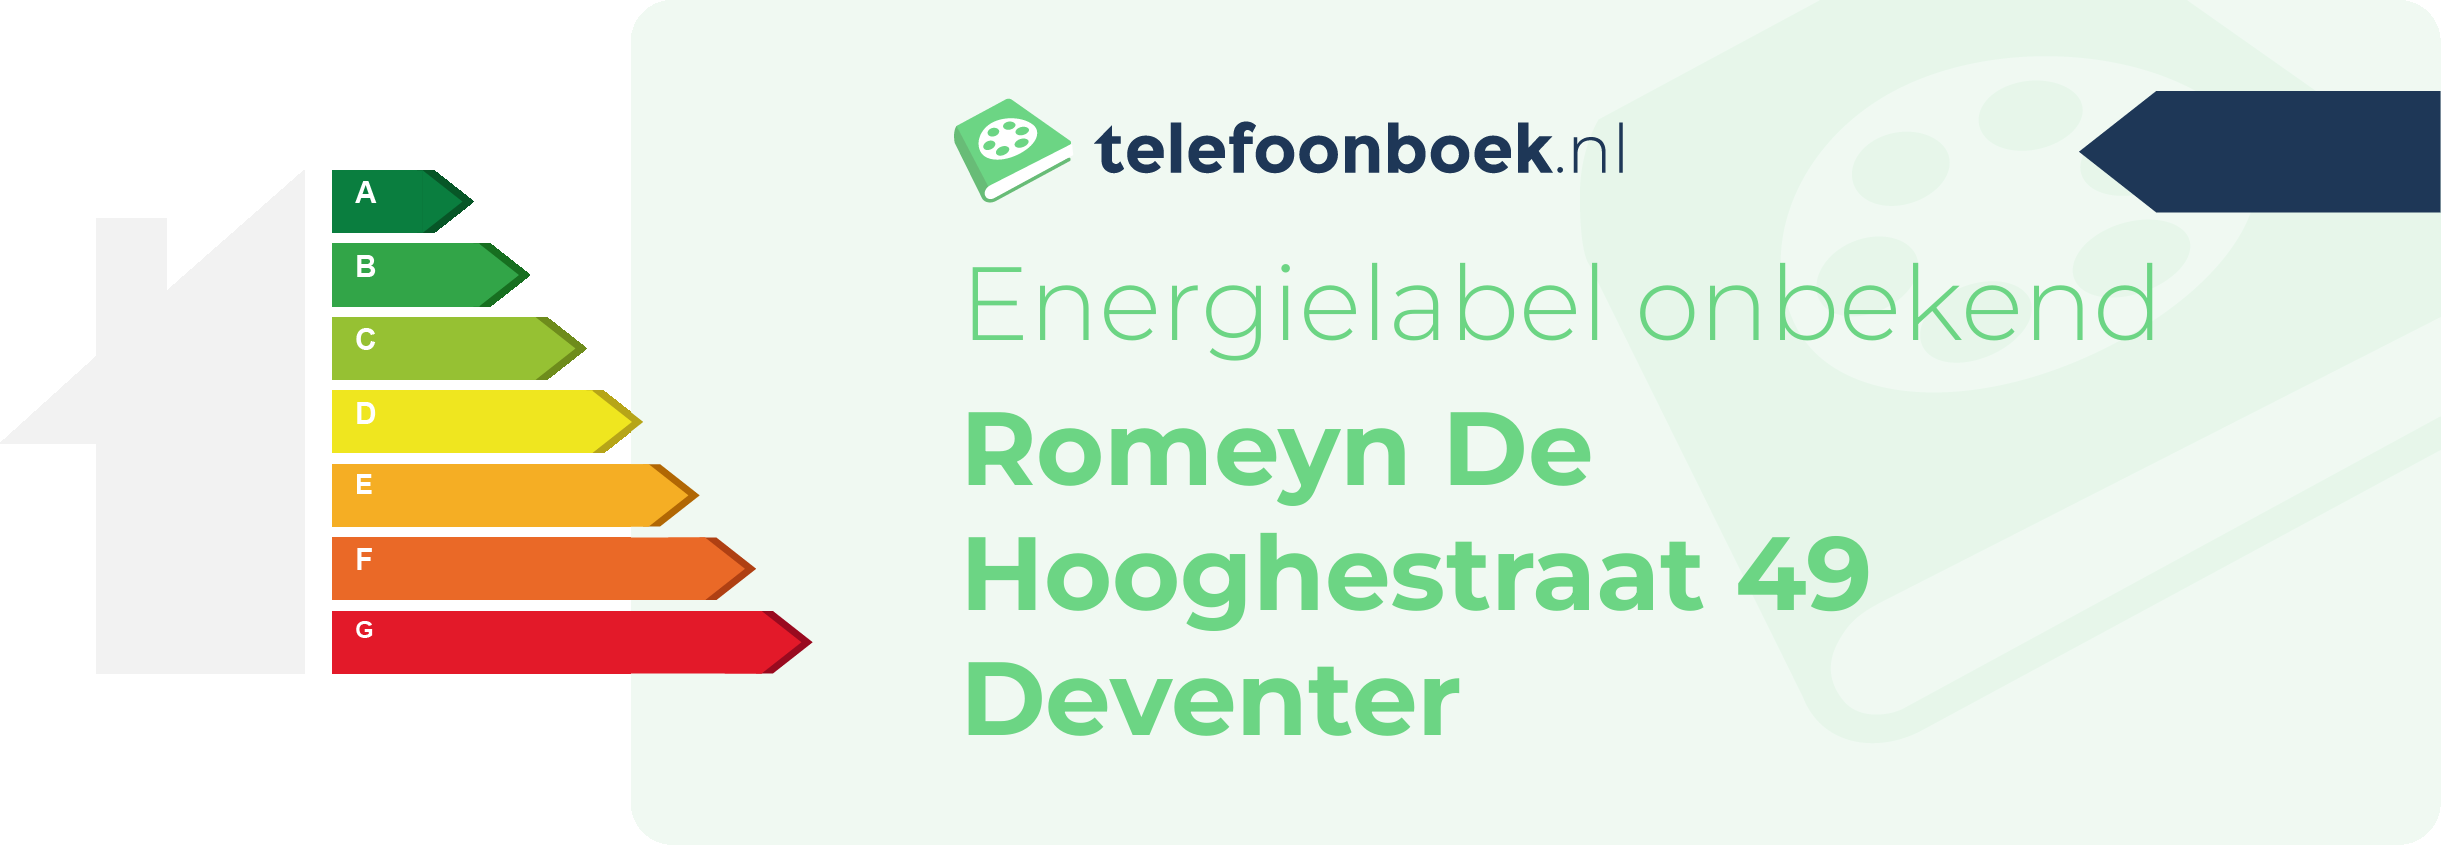 Energielabel Romeyn De Hooghestraat 49 Deventer